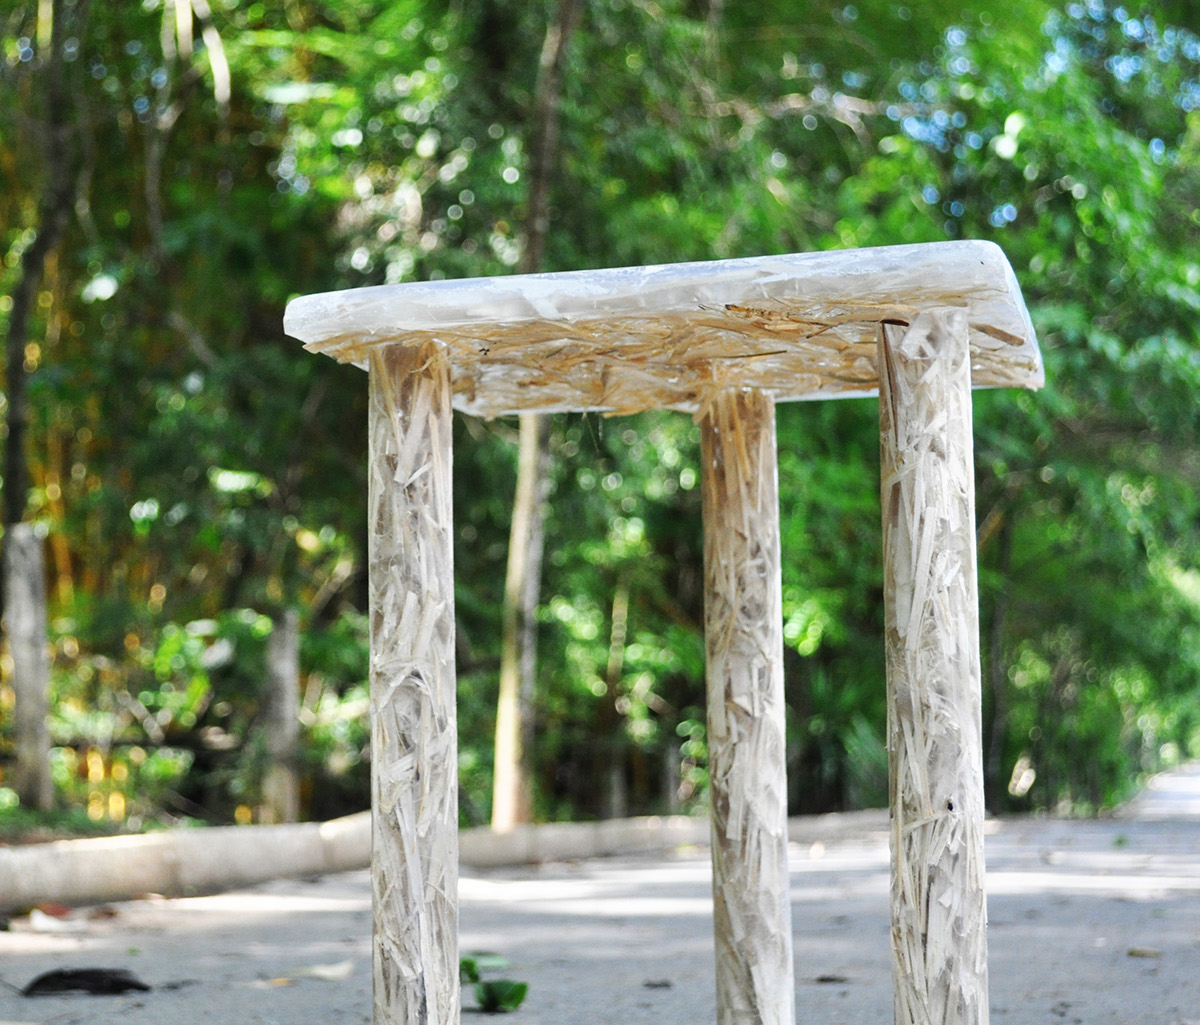 stool bamboo resin Composite bamboo stool tripod belo horizonte Brasil